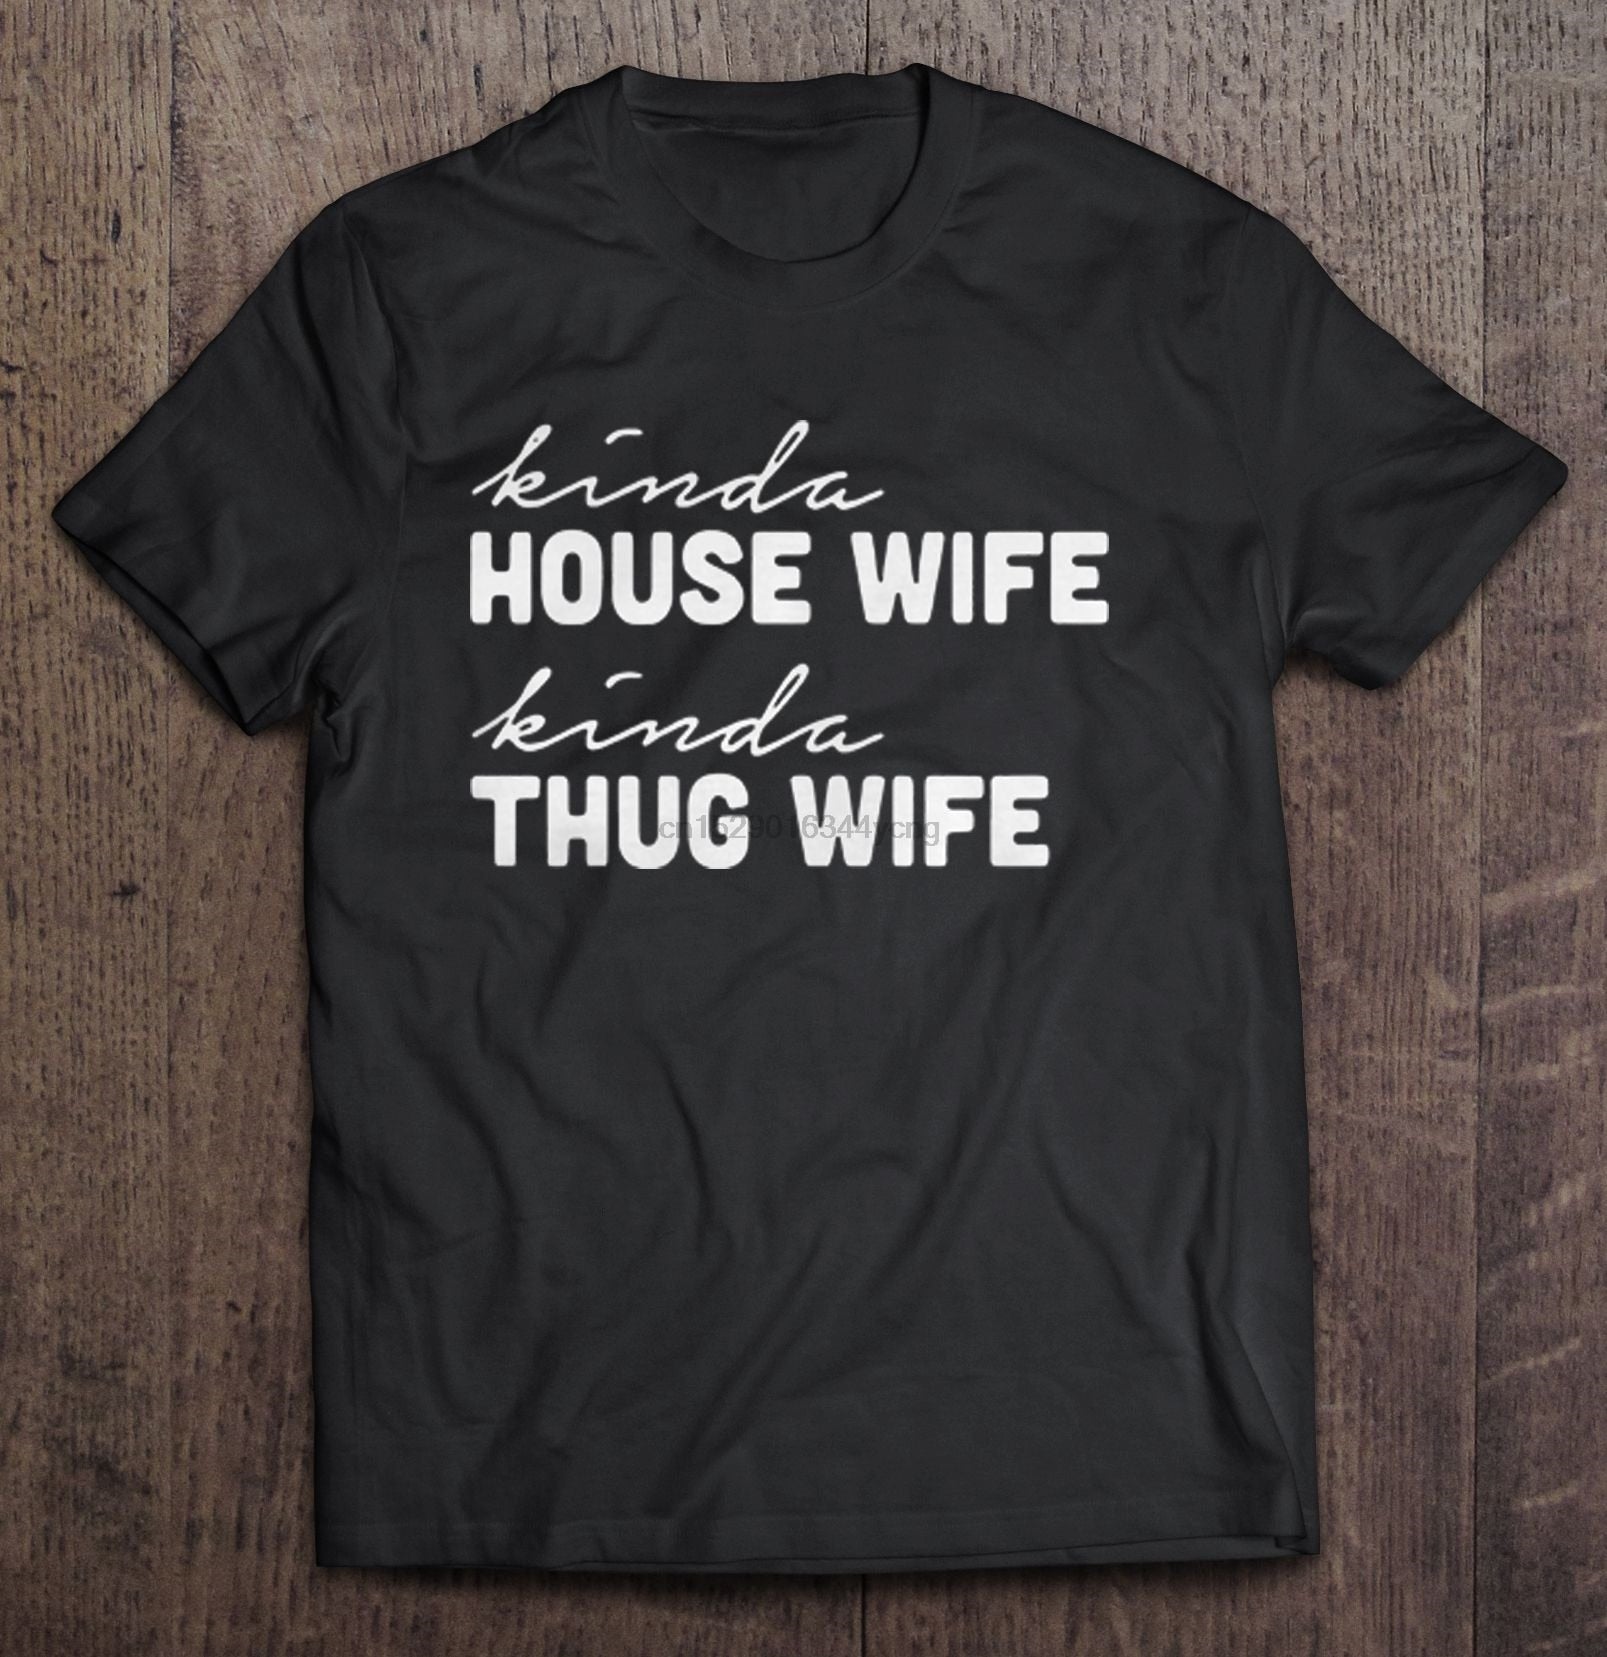 Men Funny T Shirt Fashion tshirt Kinda House Wife Kind Thug Wife Women t-shirt